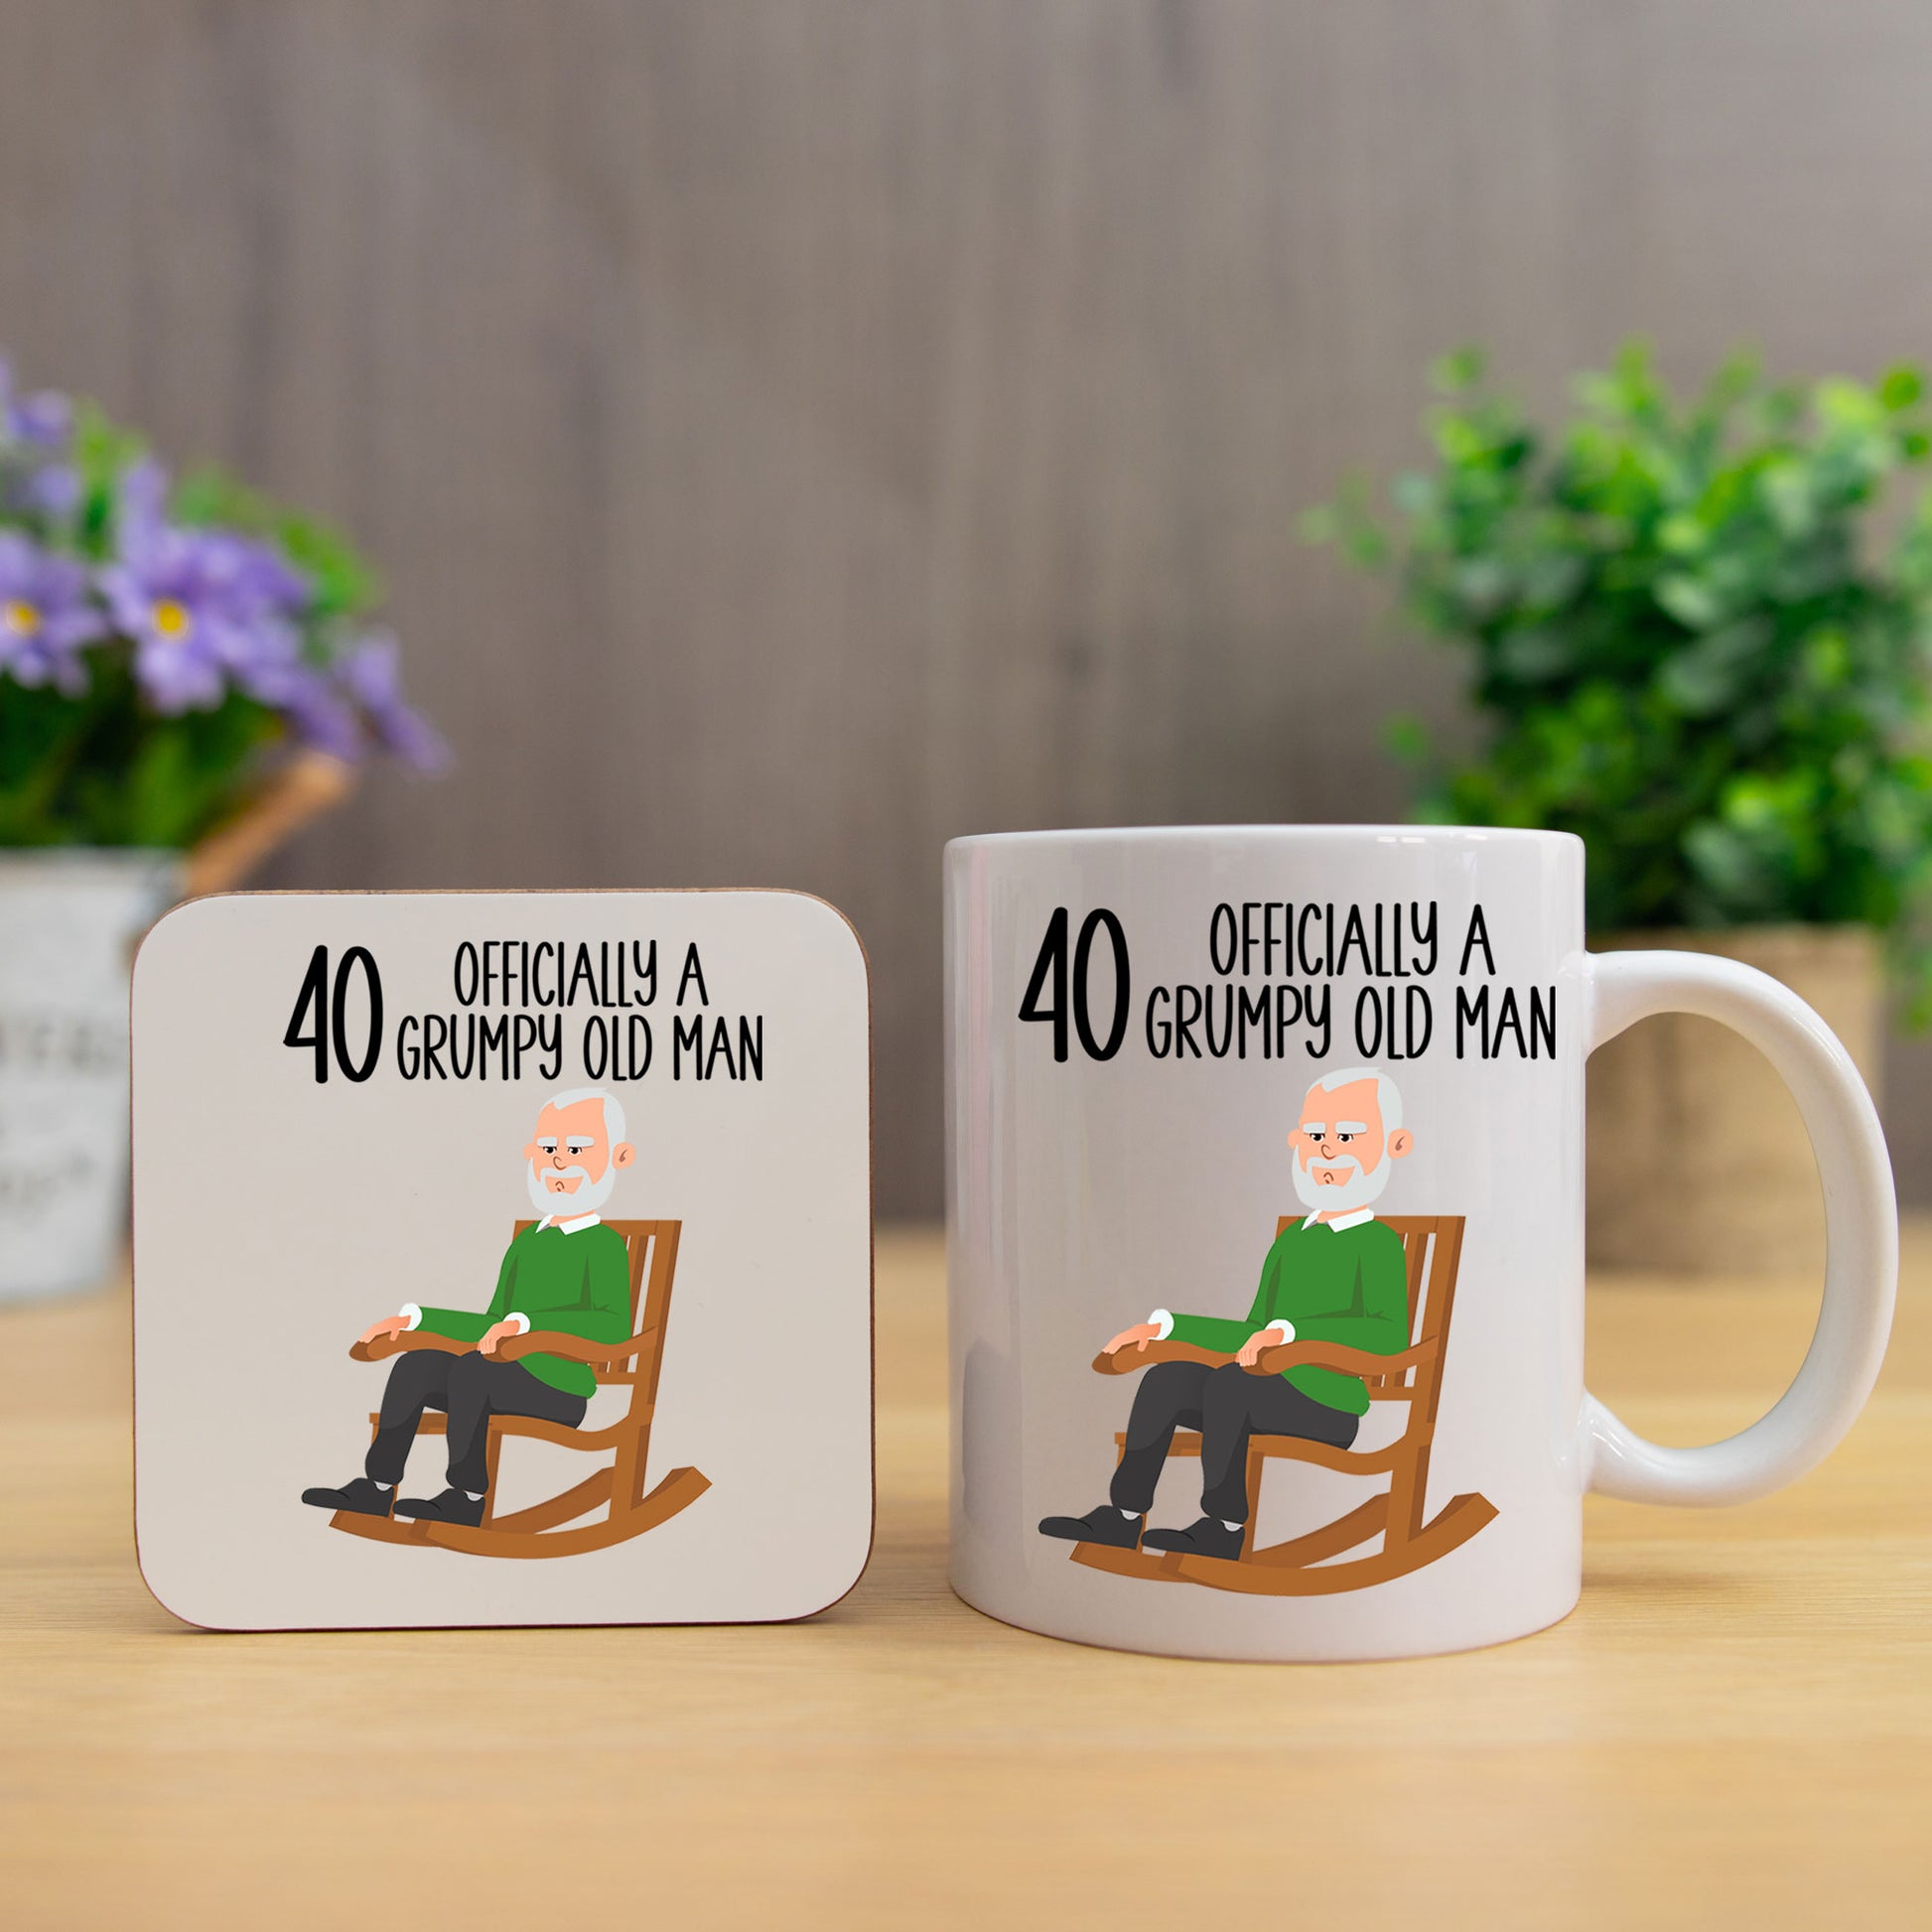 40 Officially A Grumpy Old Man Mug and/or Coaster Gift  - Always Looking Good - Mug & Coaster Set  